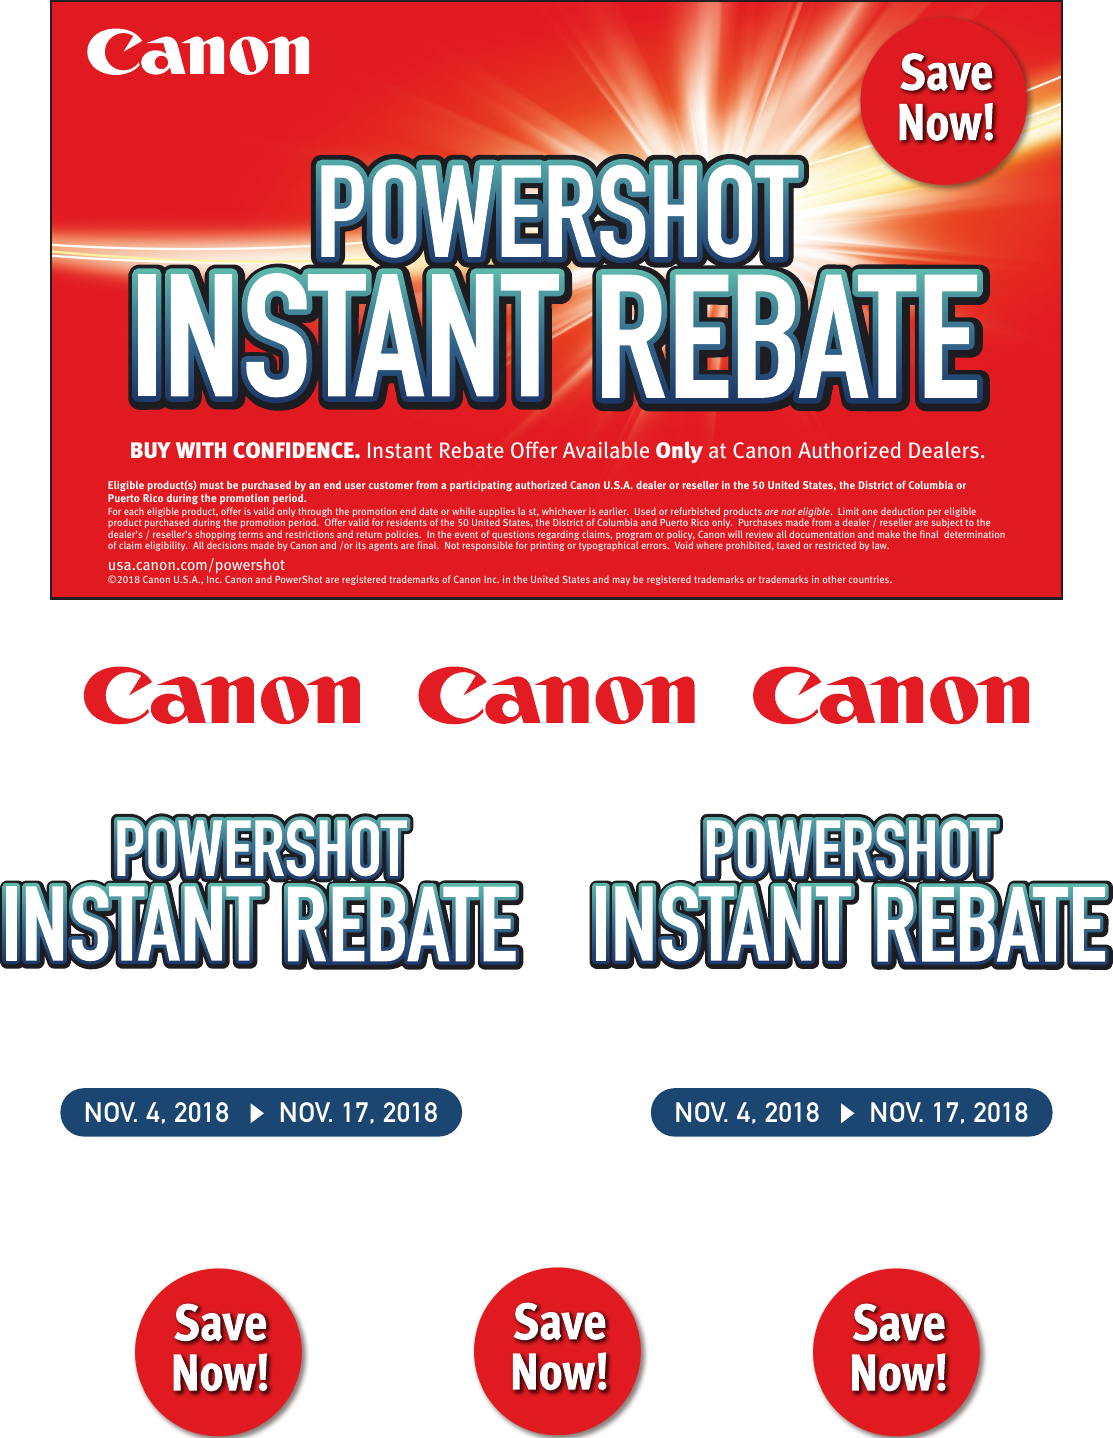 canon-power-shot-instant-rebate-powershot-promotion-110418-111718